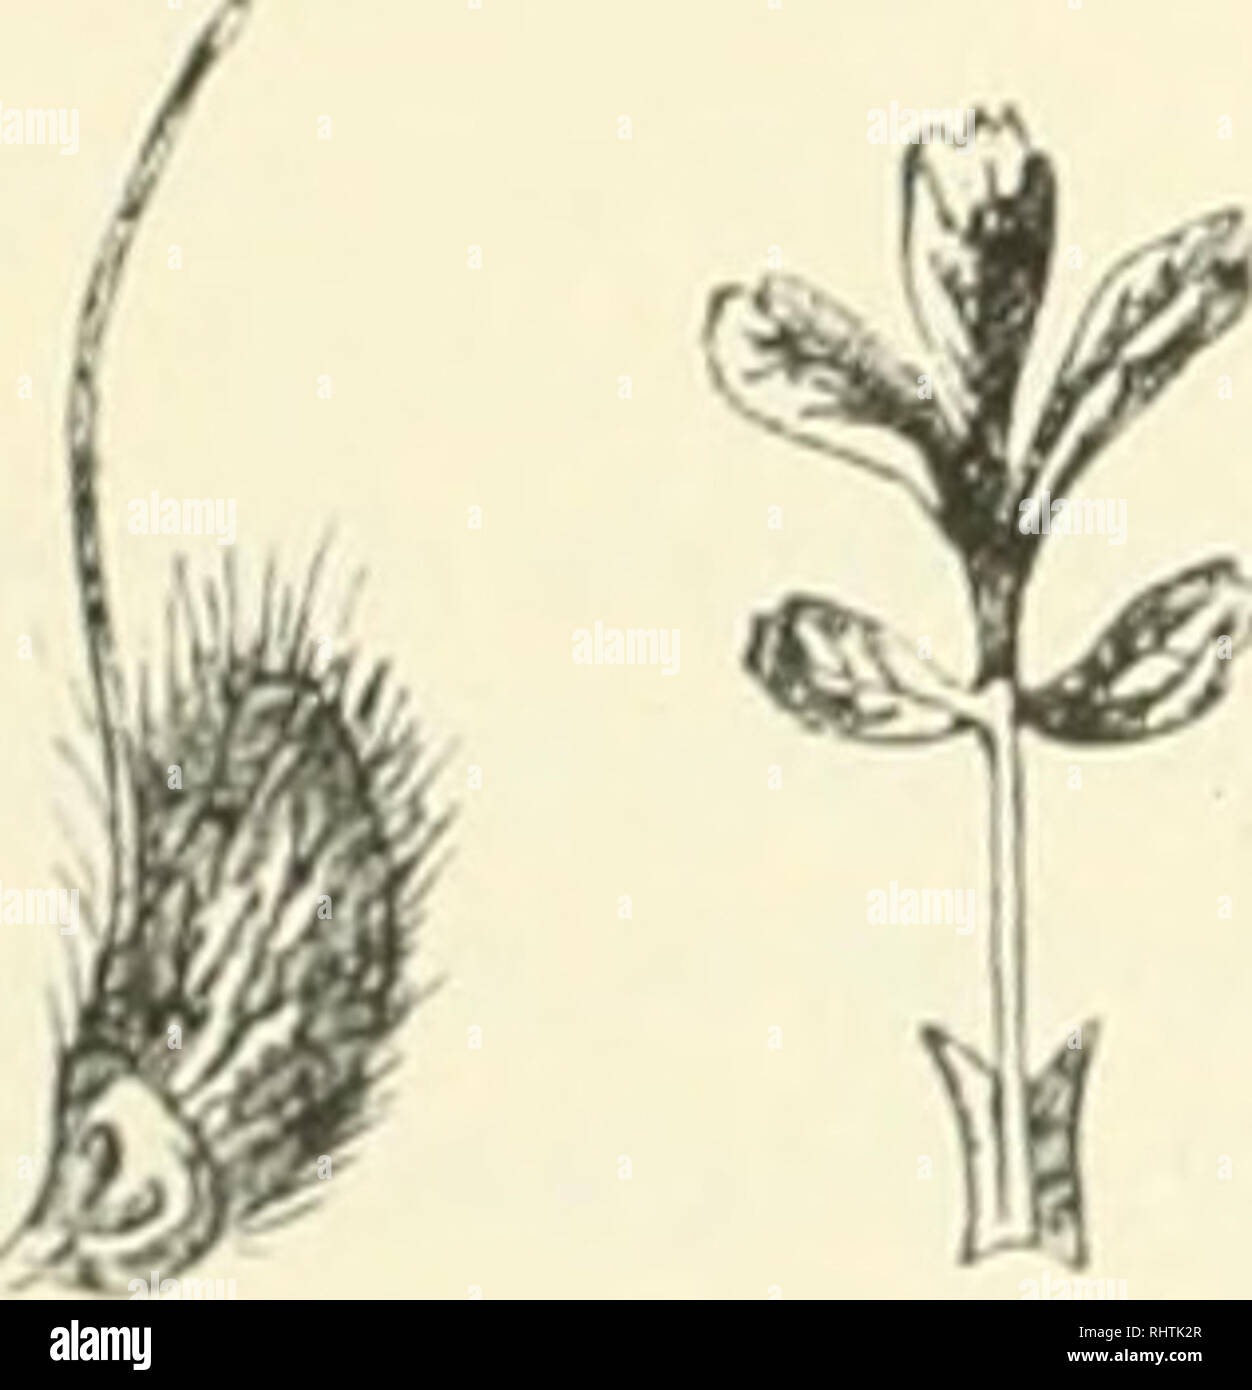 . Bibliotheca botanica. Piante. - 68 - fcre subbasalis) filiforniis carpello niaturo duplo longior, sligma non .lilalatuin, lenuissiinuia. 1. Flor. Jim.-lug. P lignosa Willd. Herb, ex Schlechlend. Mag. Ges. nat. Fr. V.rvhn II. 2.):i (1816). - Pag. x y 1 o r r h i z un Boiss. et Höh. Diagn. Ser. I. Este. 10, p. 5 (1849); Lehm. Il rev. Pot. 14. scheda. 2. fig. 1; P. lignosa ß) xylorrhiza Boiss. Fl. O. Brevetto statunitense n. 763 (18;2). - T r i c h o t h a 1 a in ii s lignosus Lehm. Nov. Acta Acad. Nat. Cur. X. 585, ic. t. 49. (1821): Lehmannia lignosa Tratt. Ros. Moiiogr. 1". 144 (1824). Diese Spezies gehört zu fitMi Foto Stock